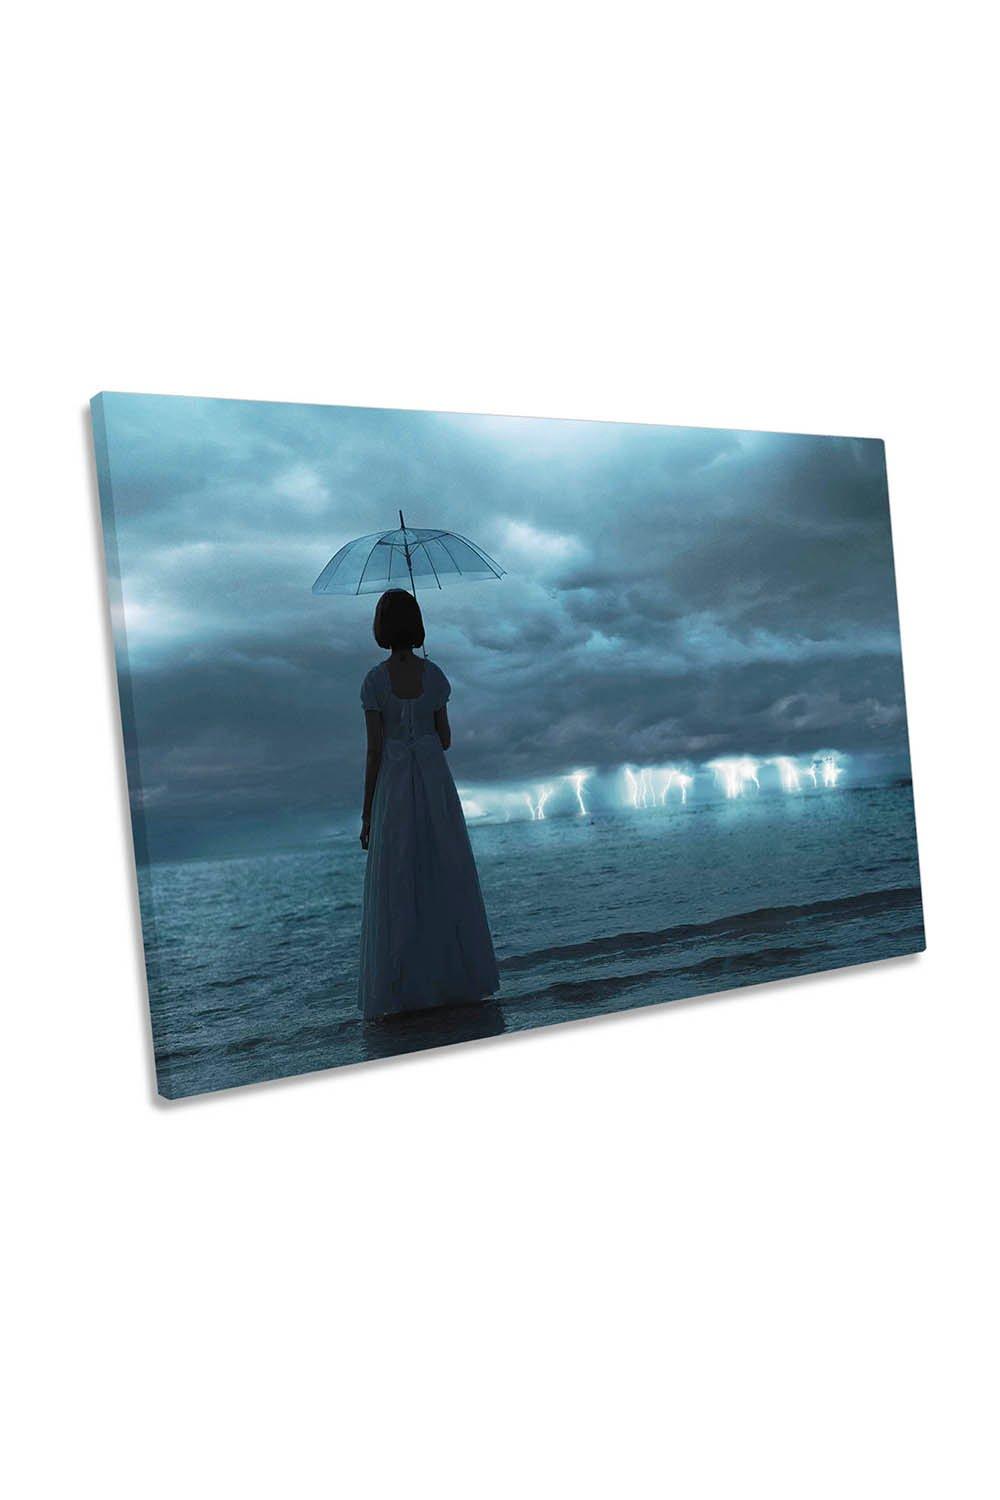 The Silent Sea Umbrella Modern Canvas Wall Art Picture Print